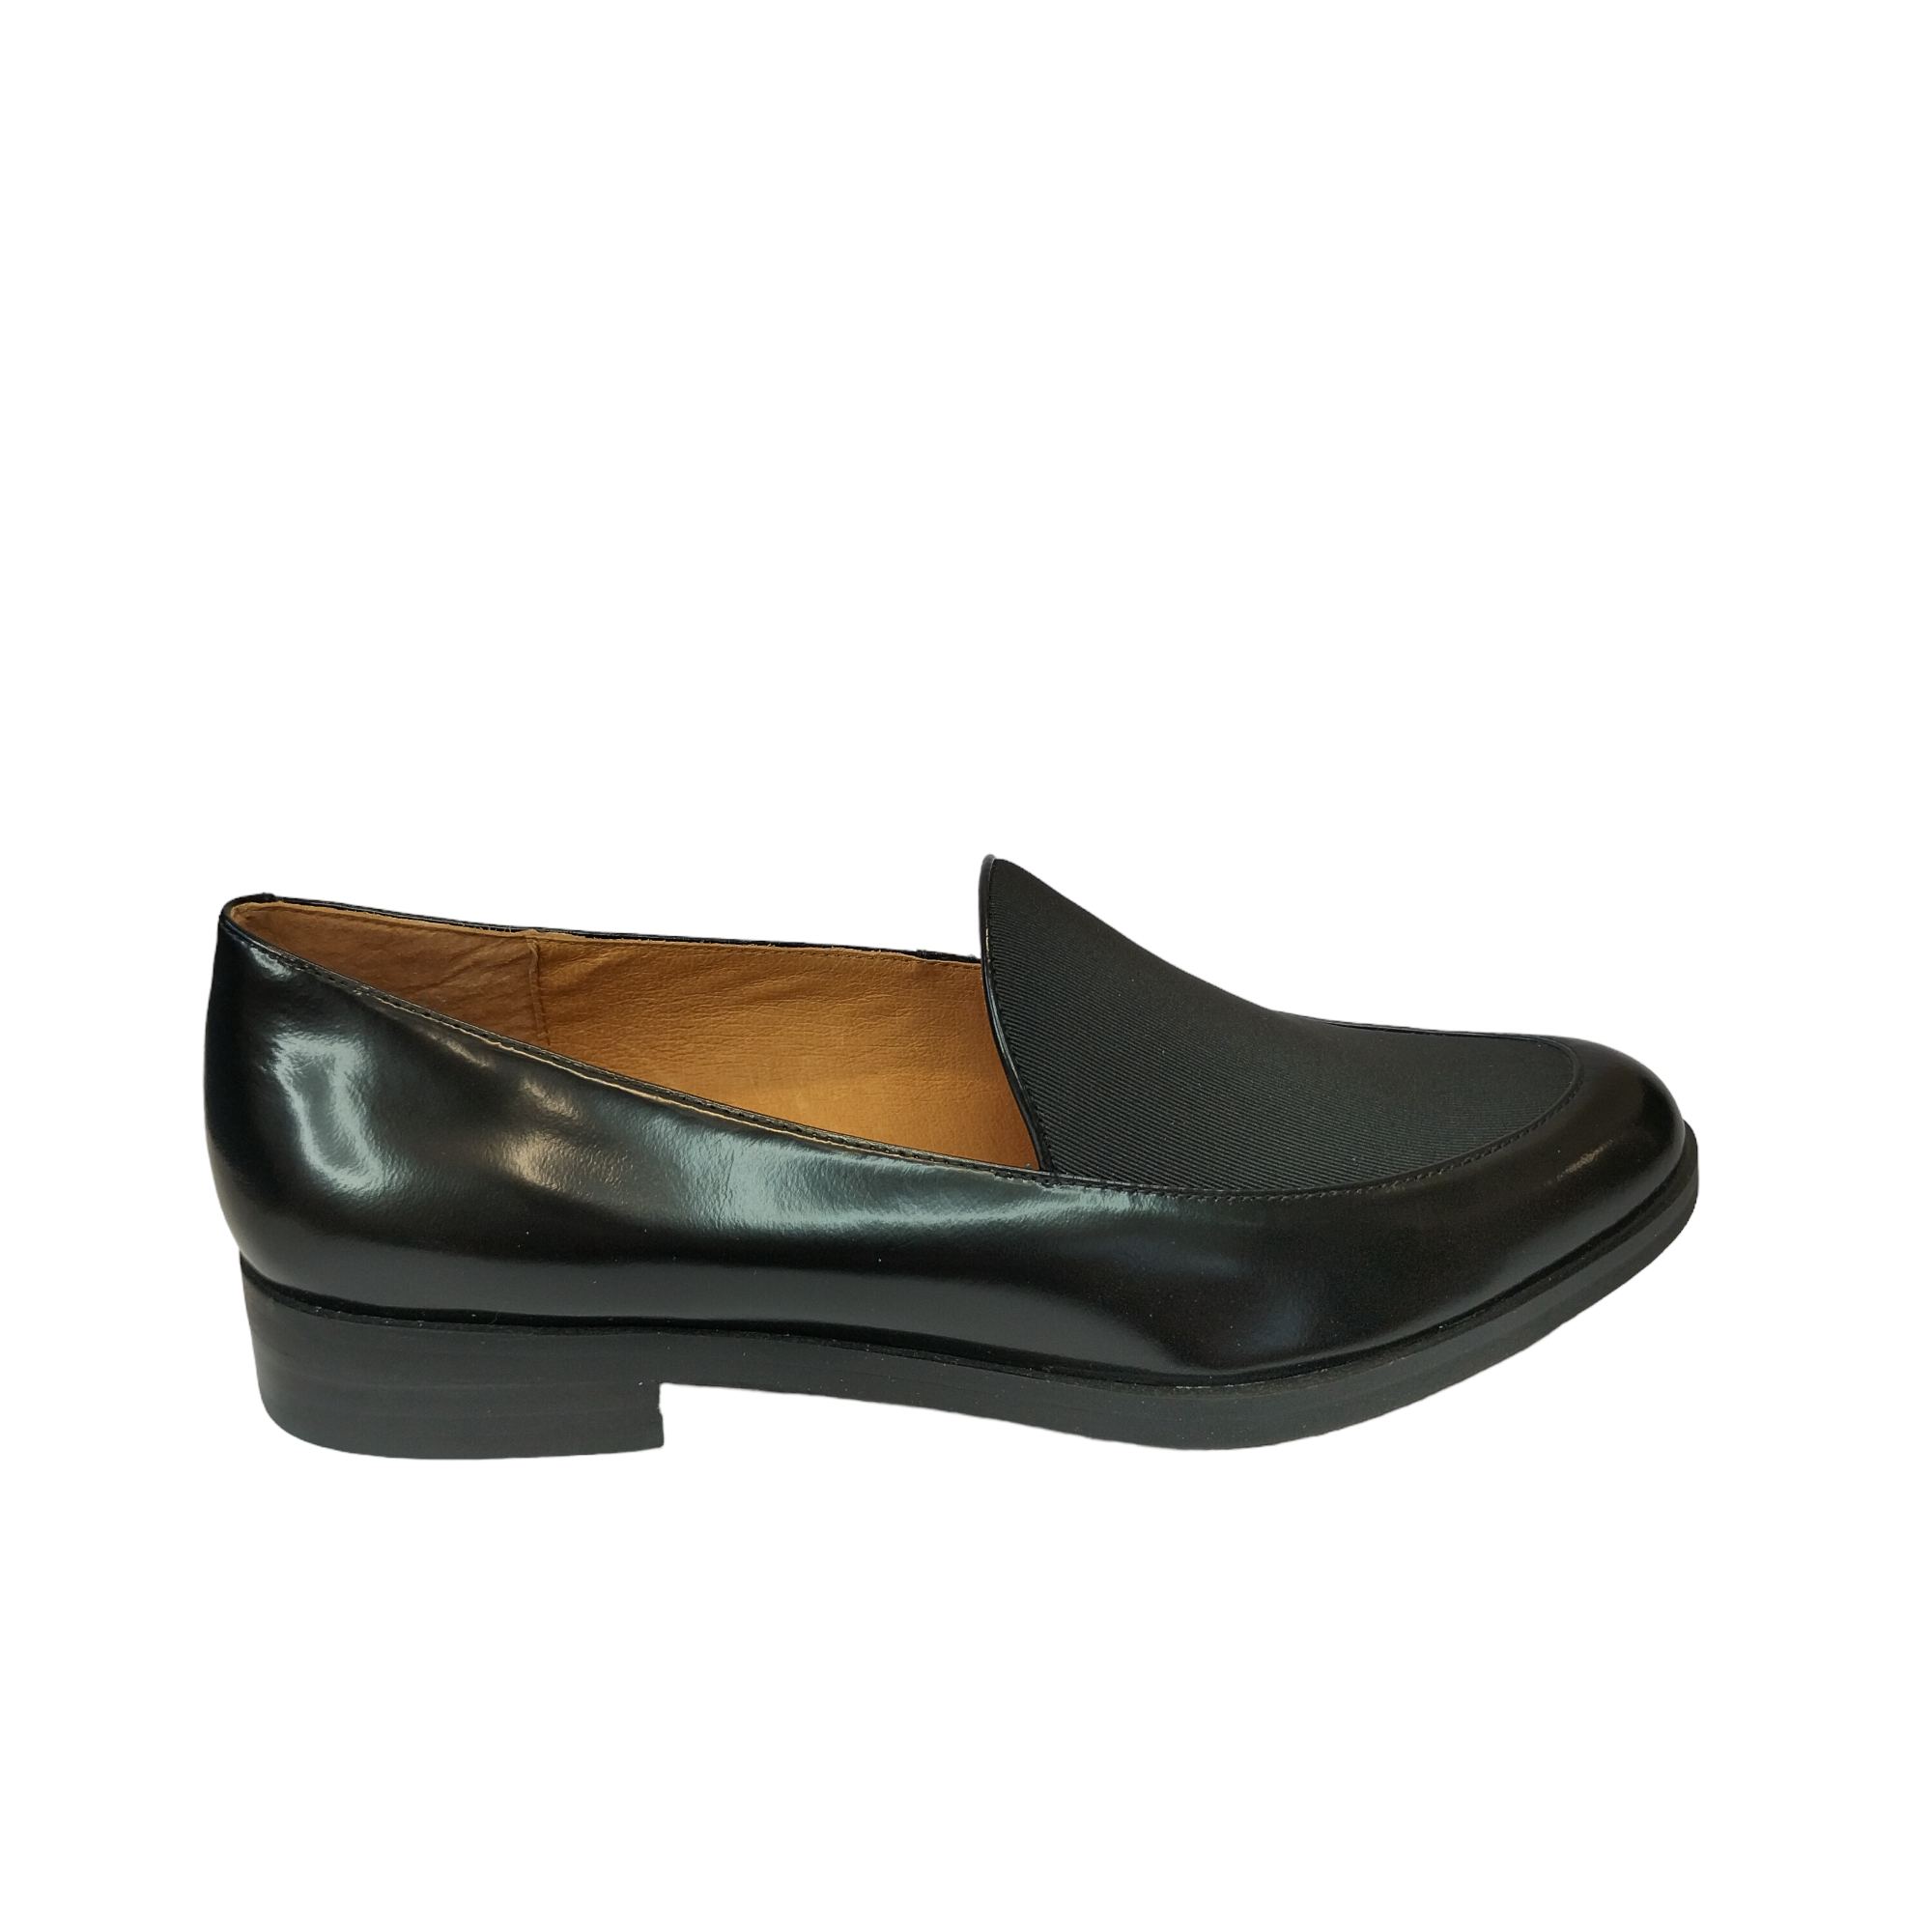 Zada - shoe&me - EOS - Shoe - Loafer, Shoes, Winter, Womens